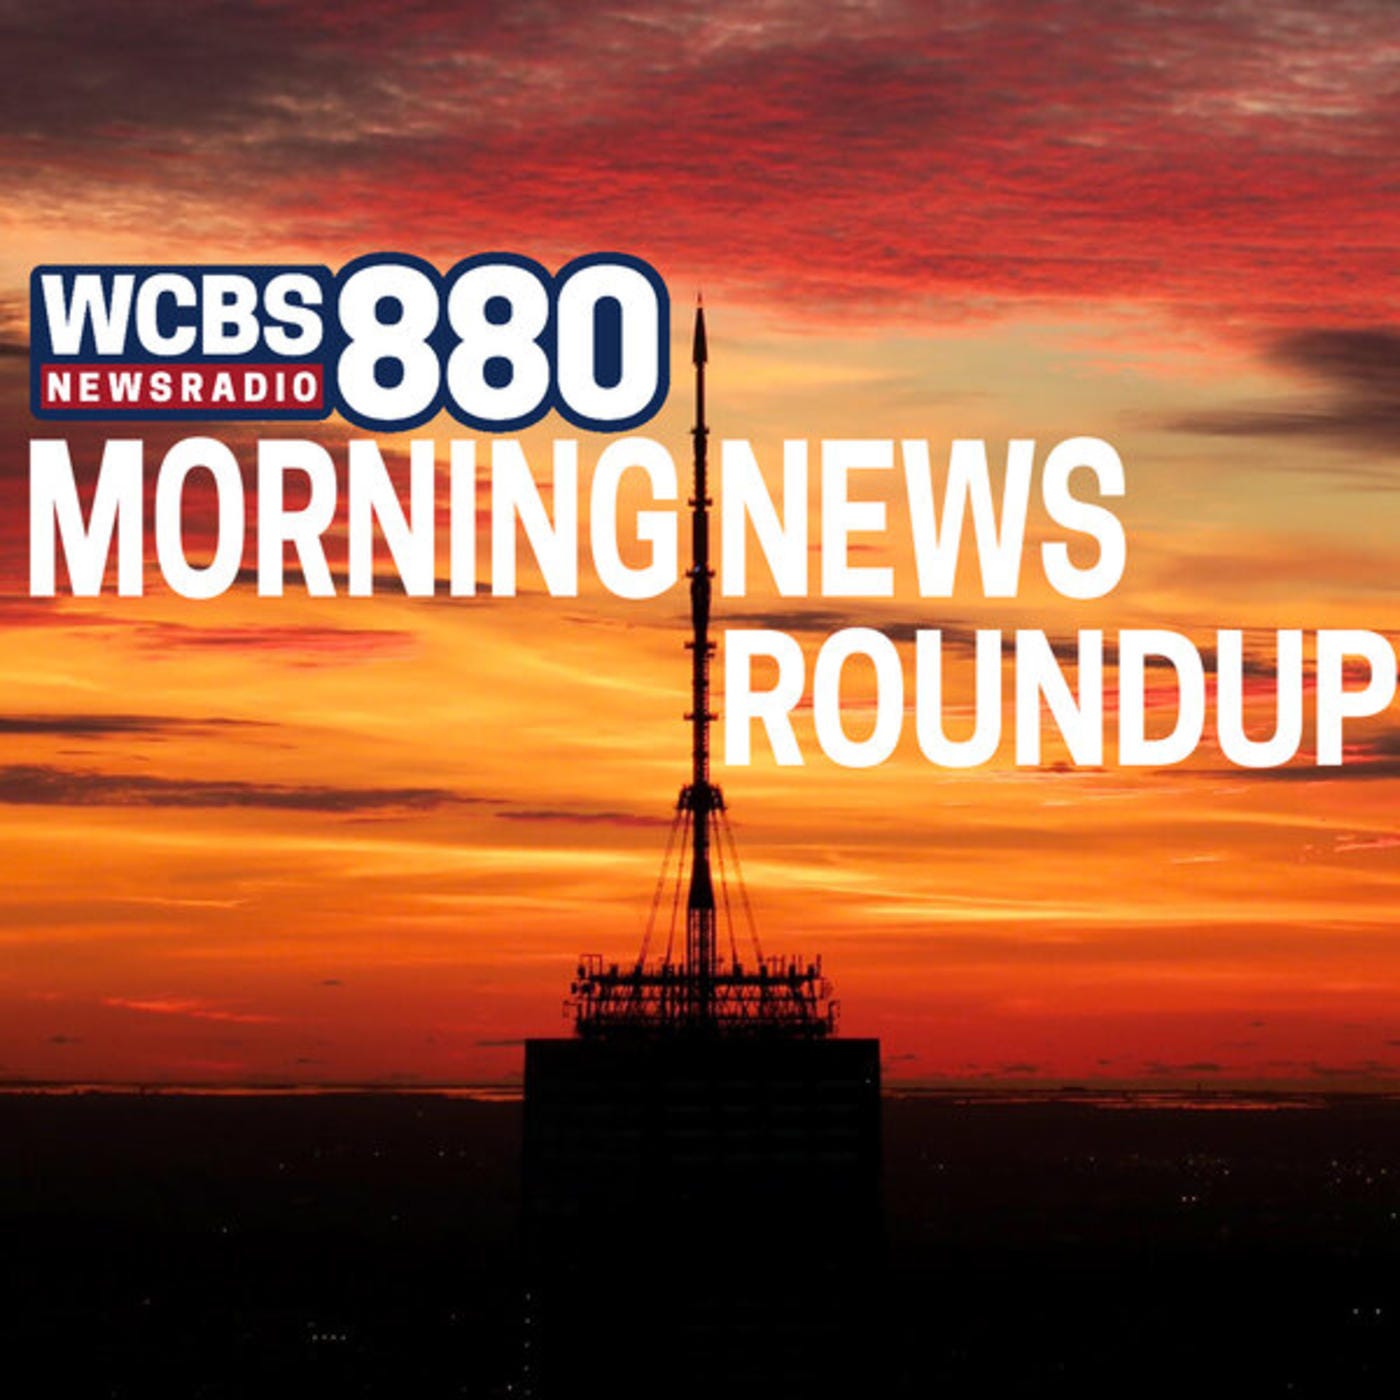 WCBS 880 Morning News Roundup - Thursday, January 26th, 2023